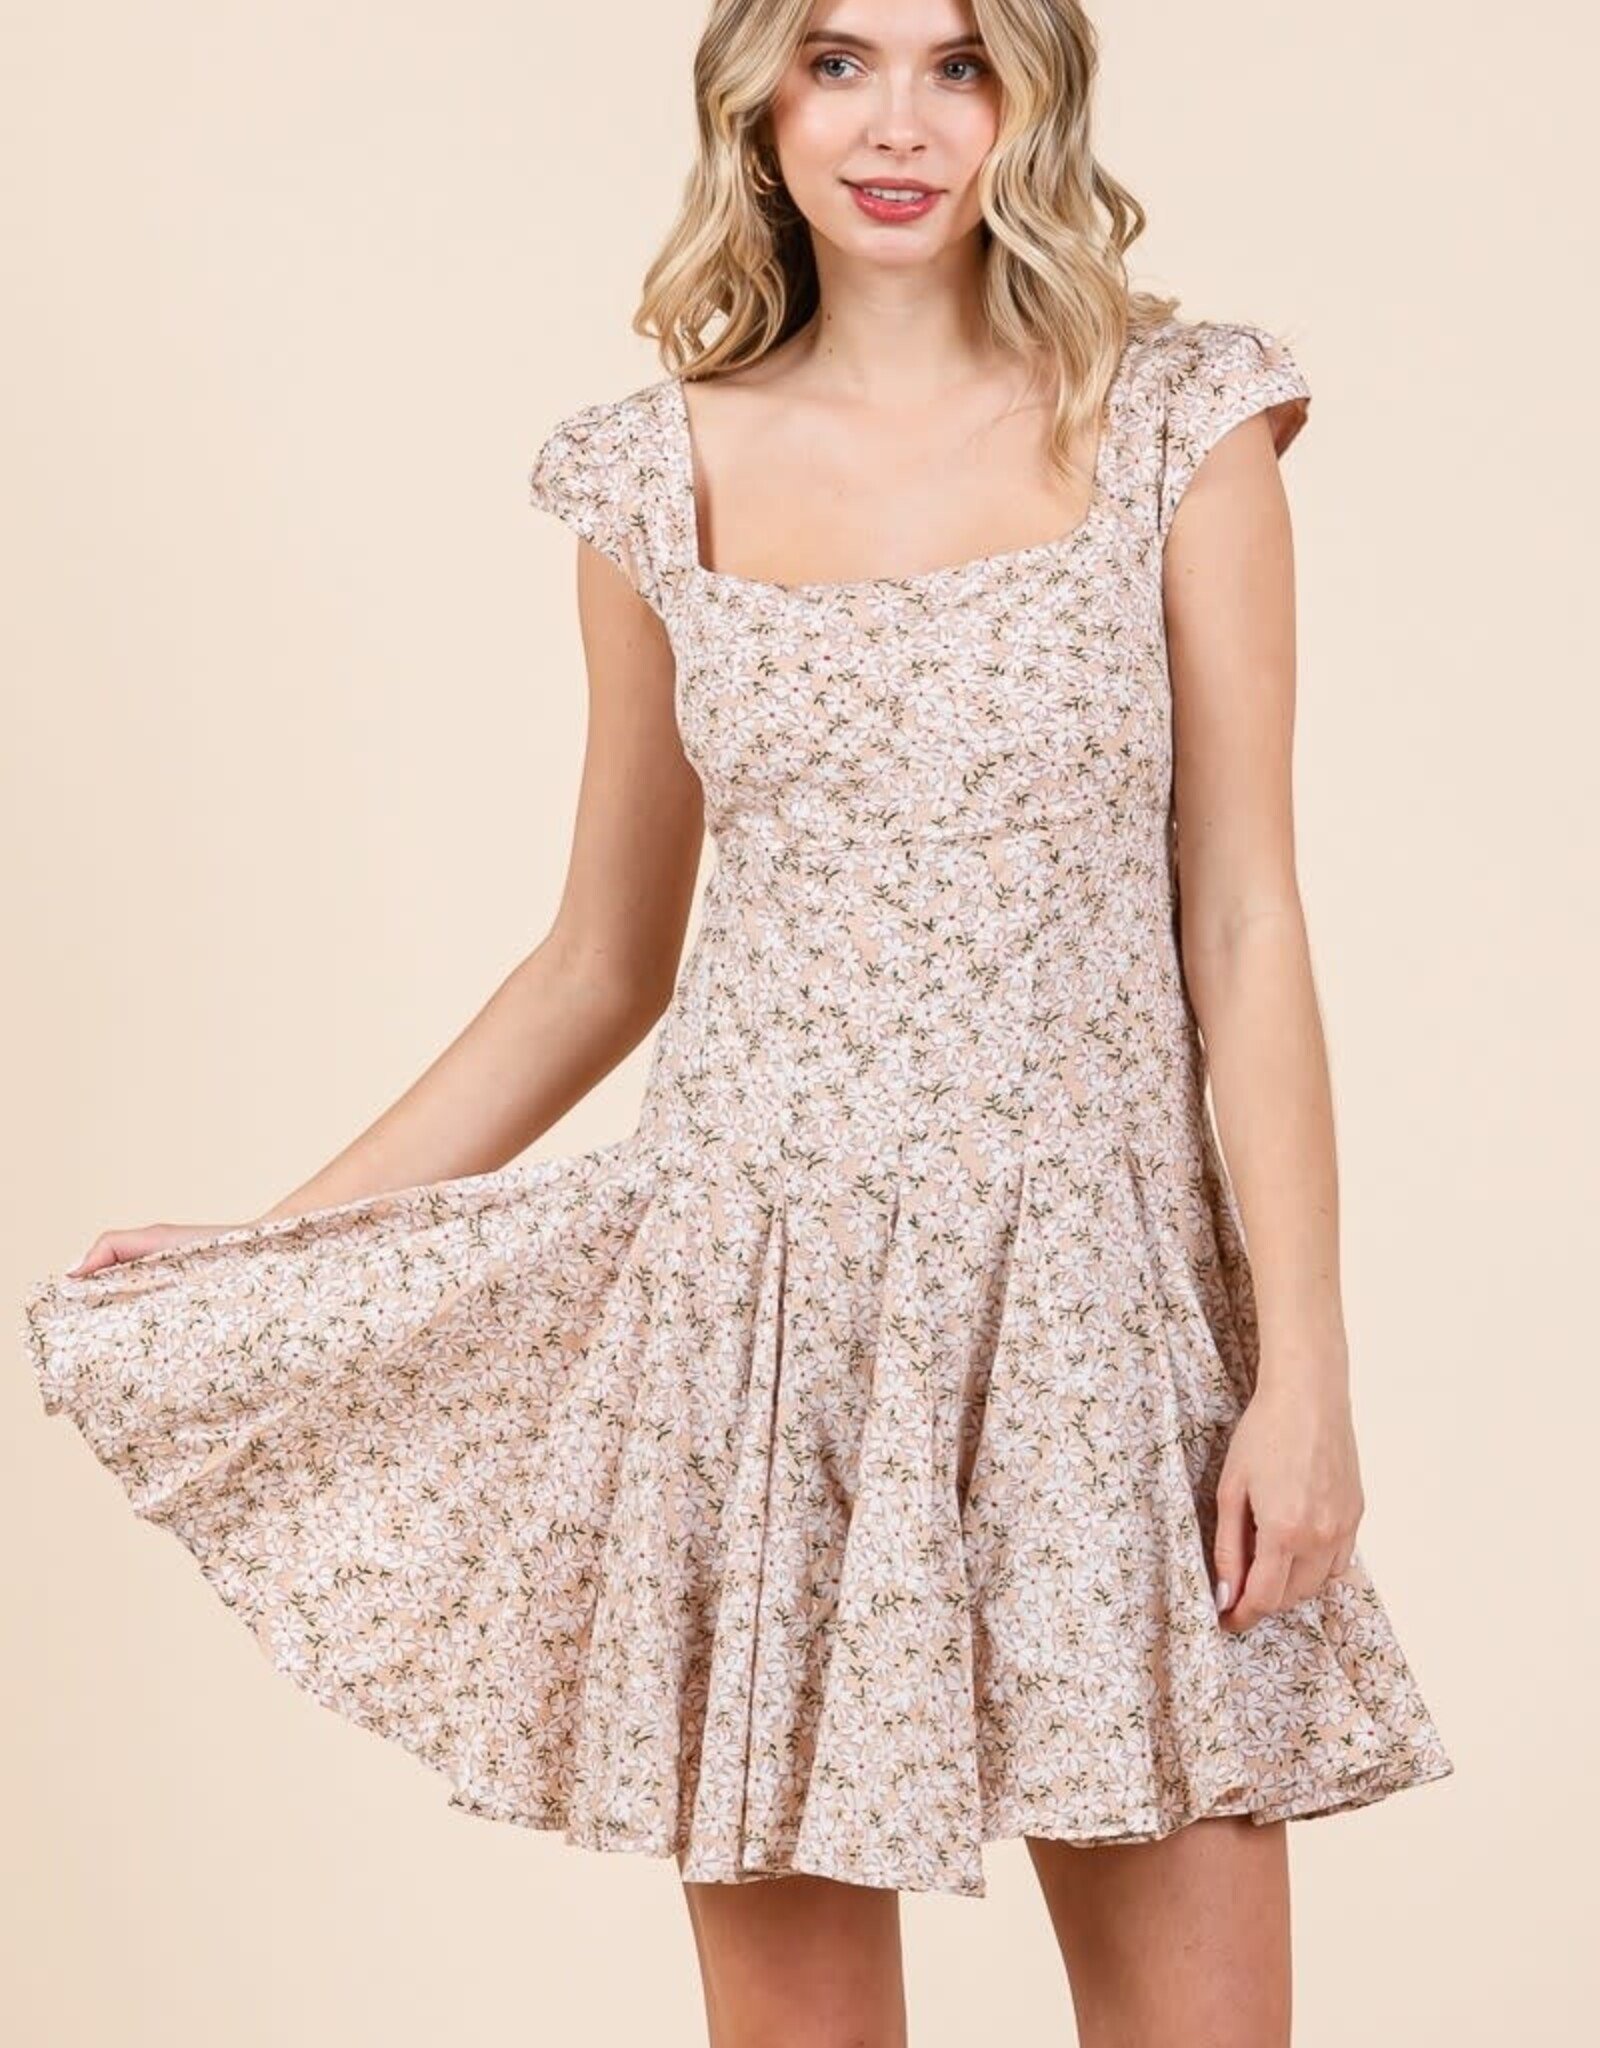 Miss Bliss Peach Fit-and-Flare Mini Dress